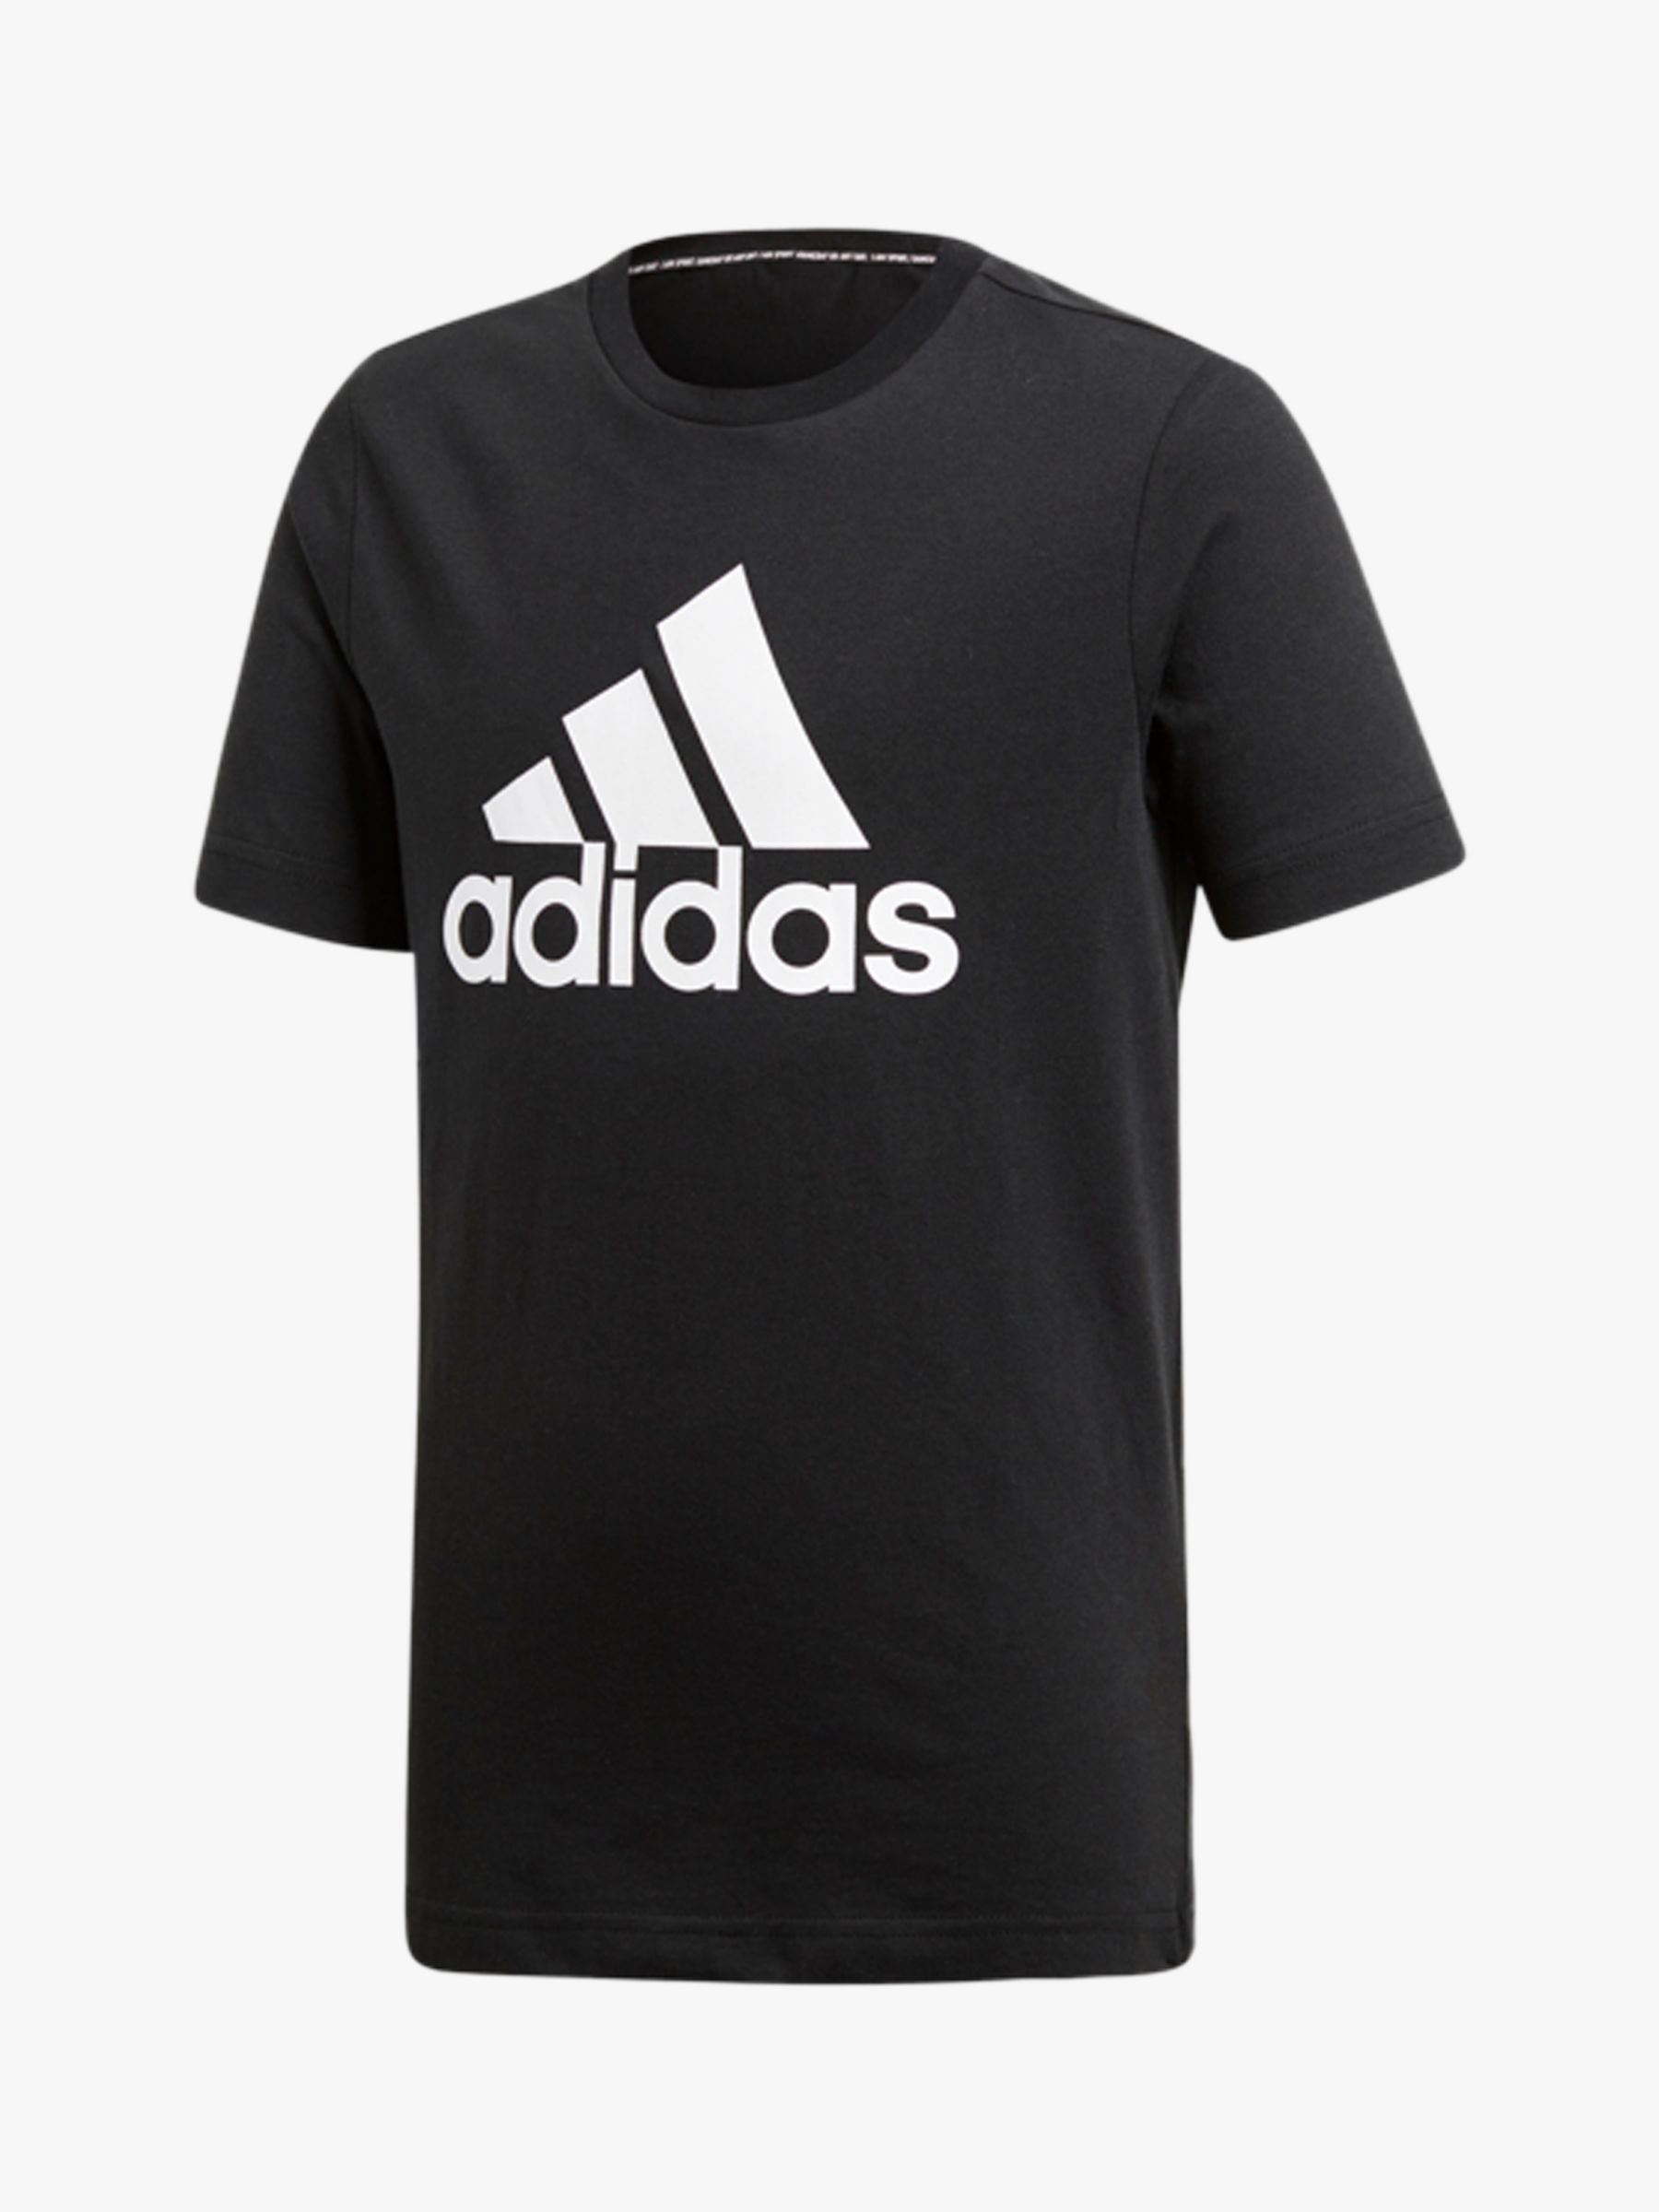 adidas boys shirt